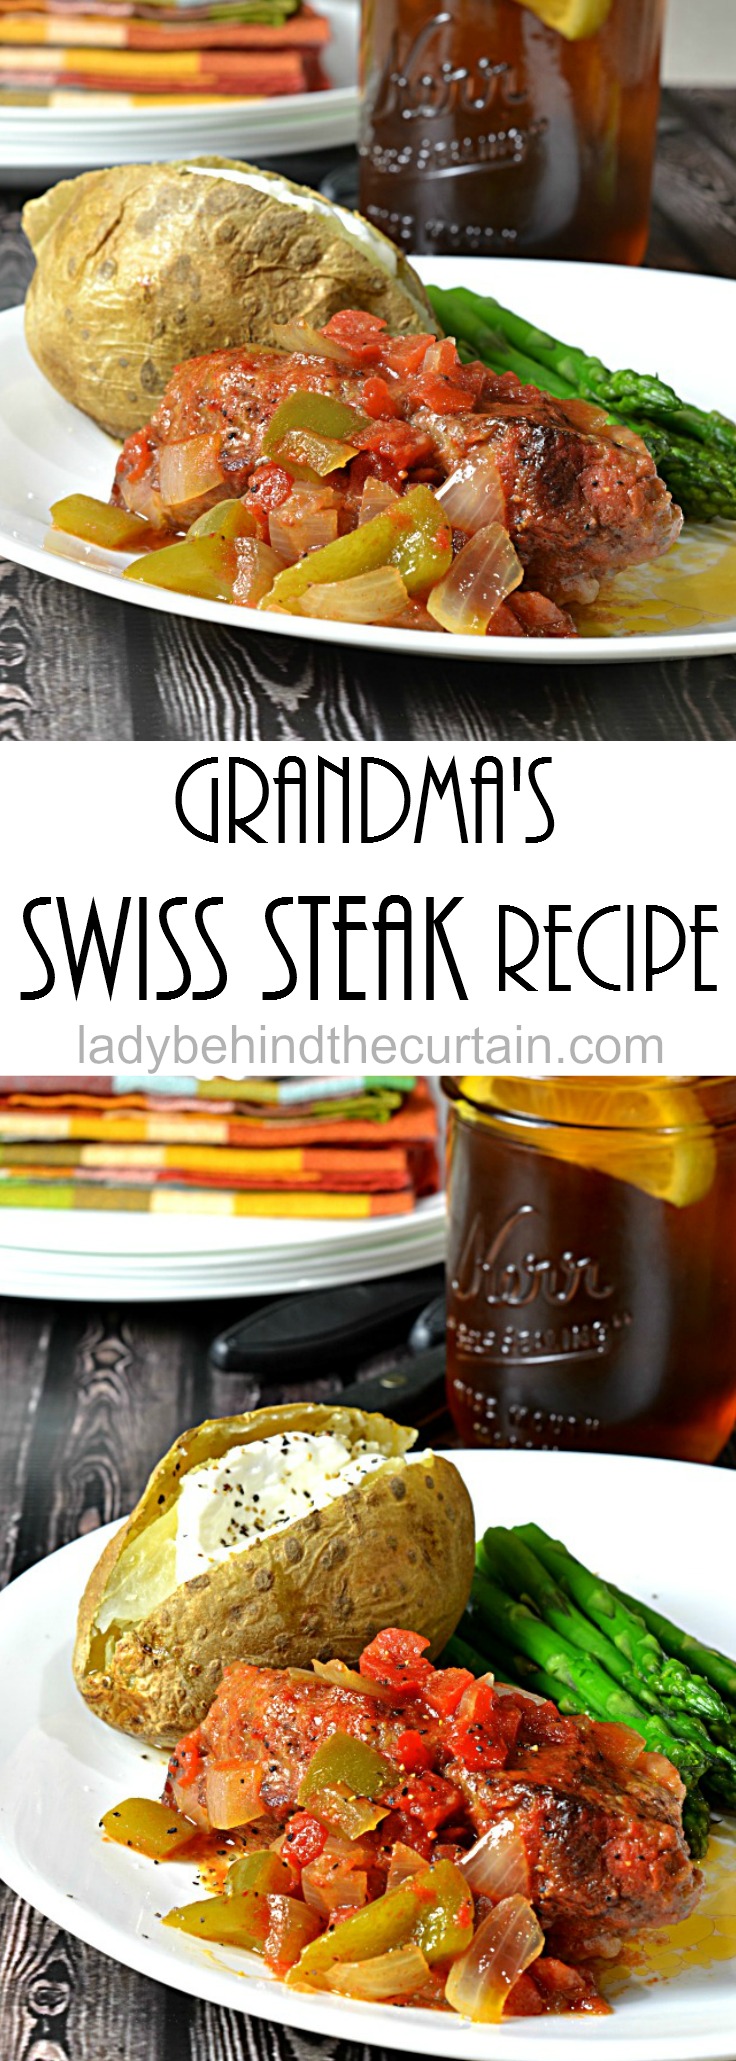 Grandma's Swiss Steak Recipe|One pot wonder, tri tip, easy dinner recipe, recipe for a crowd